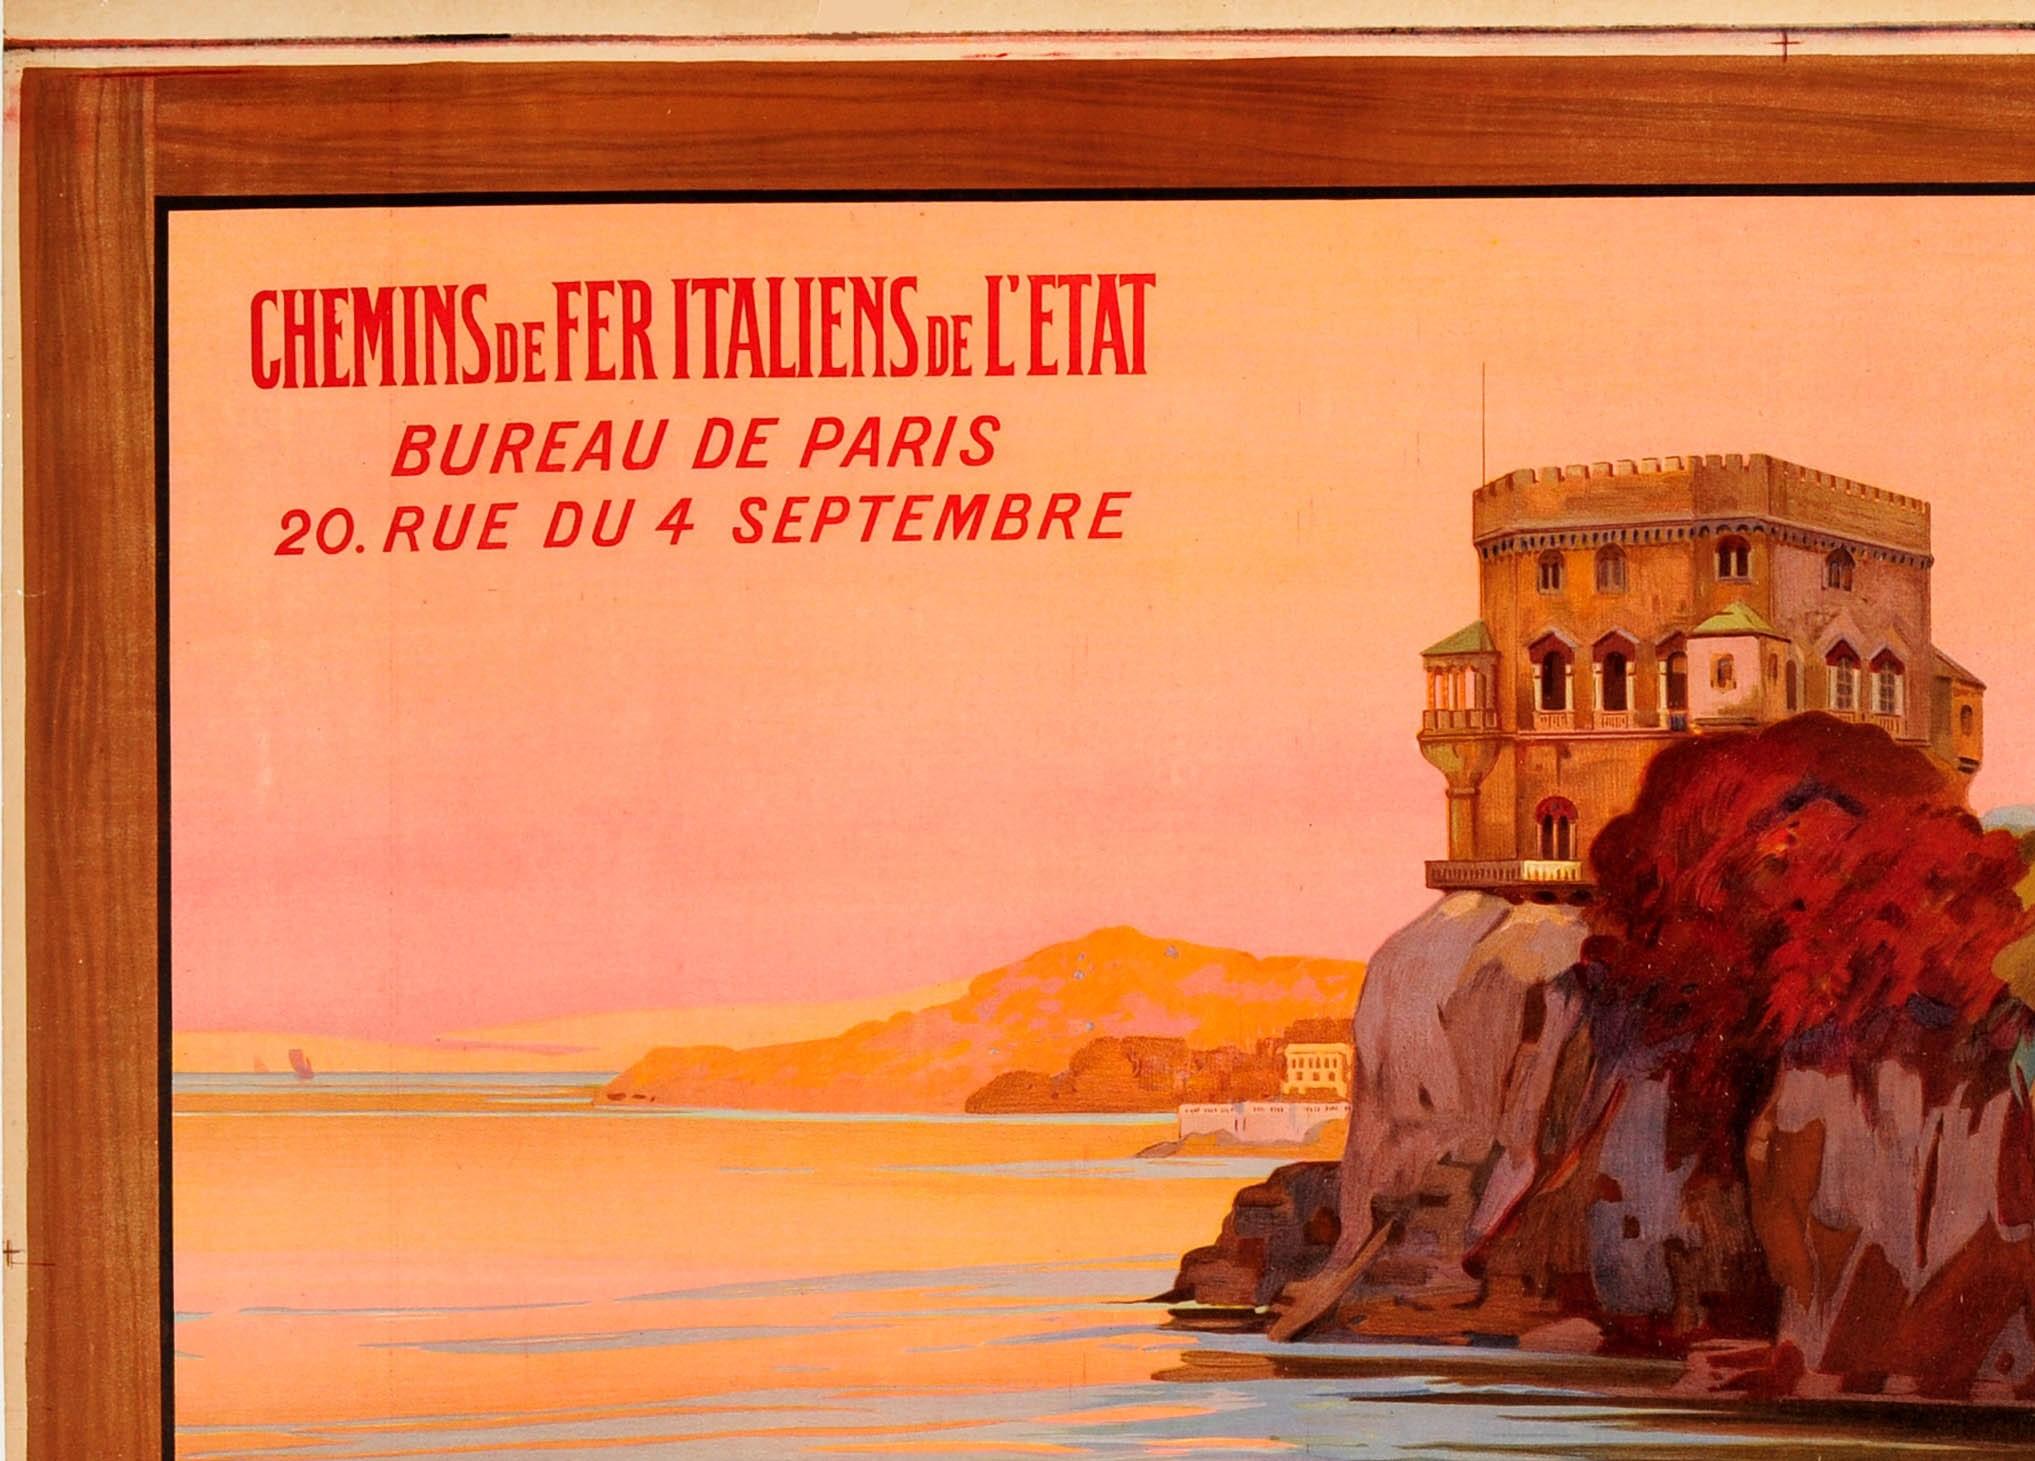 Large original antique travel advertising poster for the Italian Riviera Italy / Riviera Ligure Italia by train / Chemins de Fer Italiens de l'Etat (Italian State Railways) featuring a stunning image by Enrico Grimaldi (1879-1966) of the Castello di